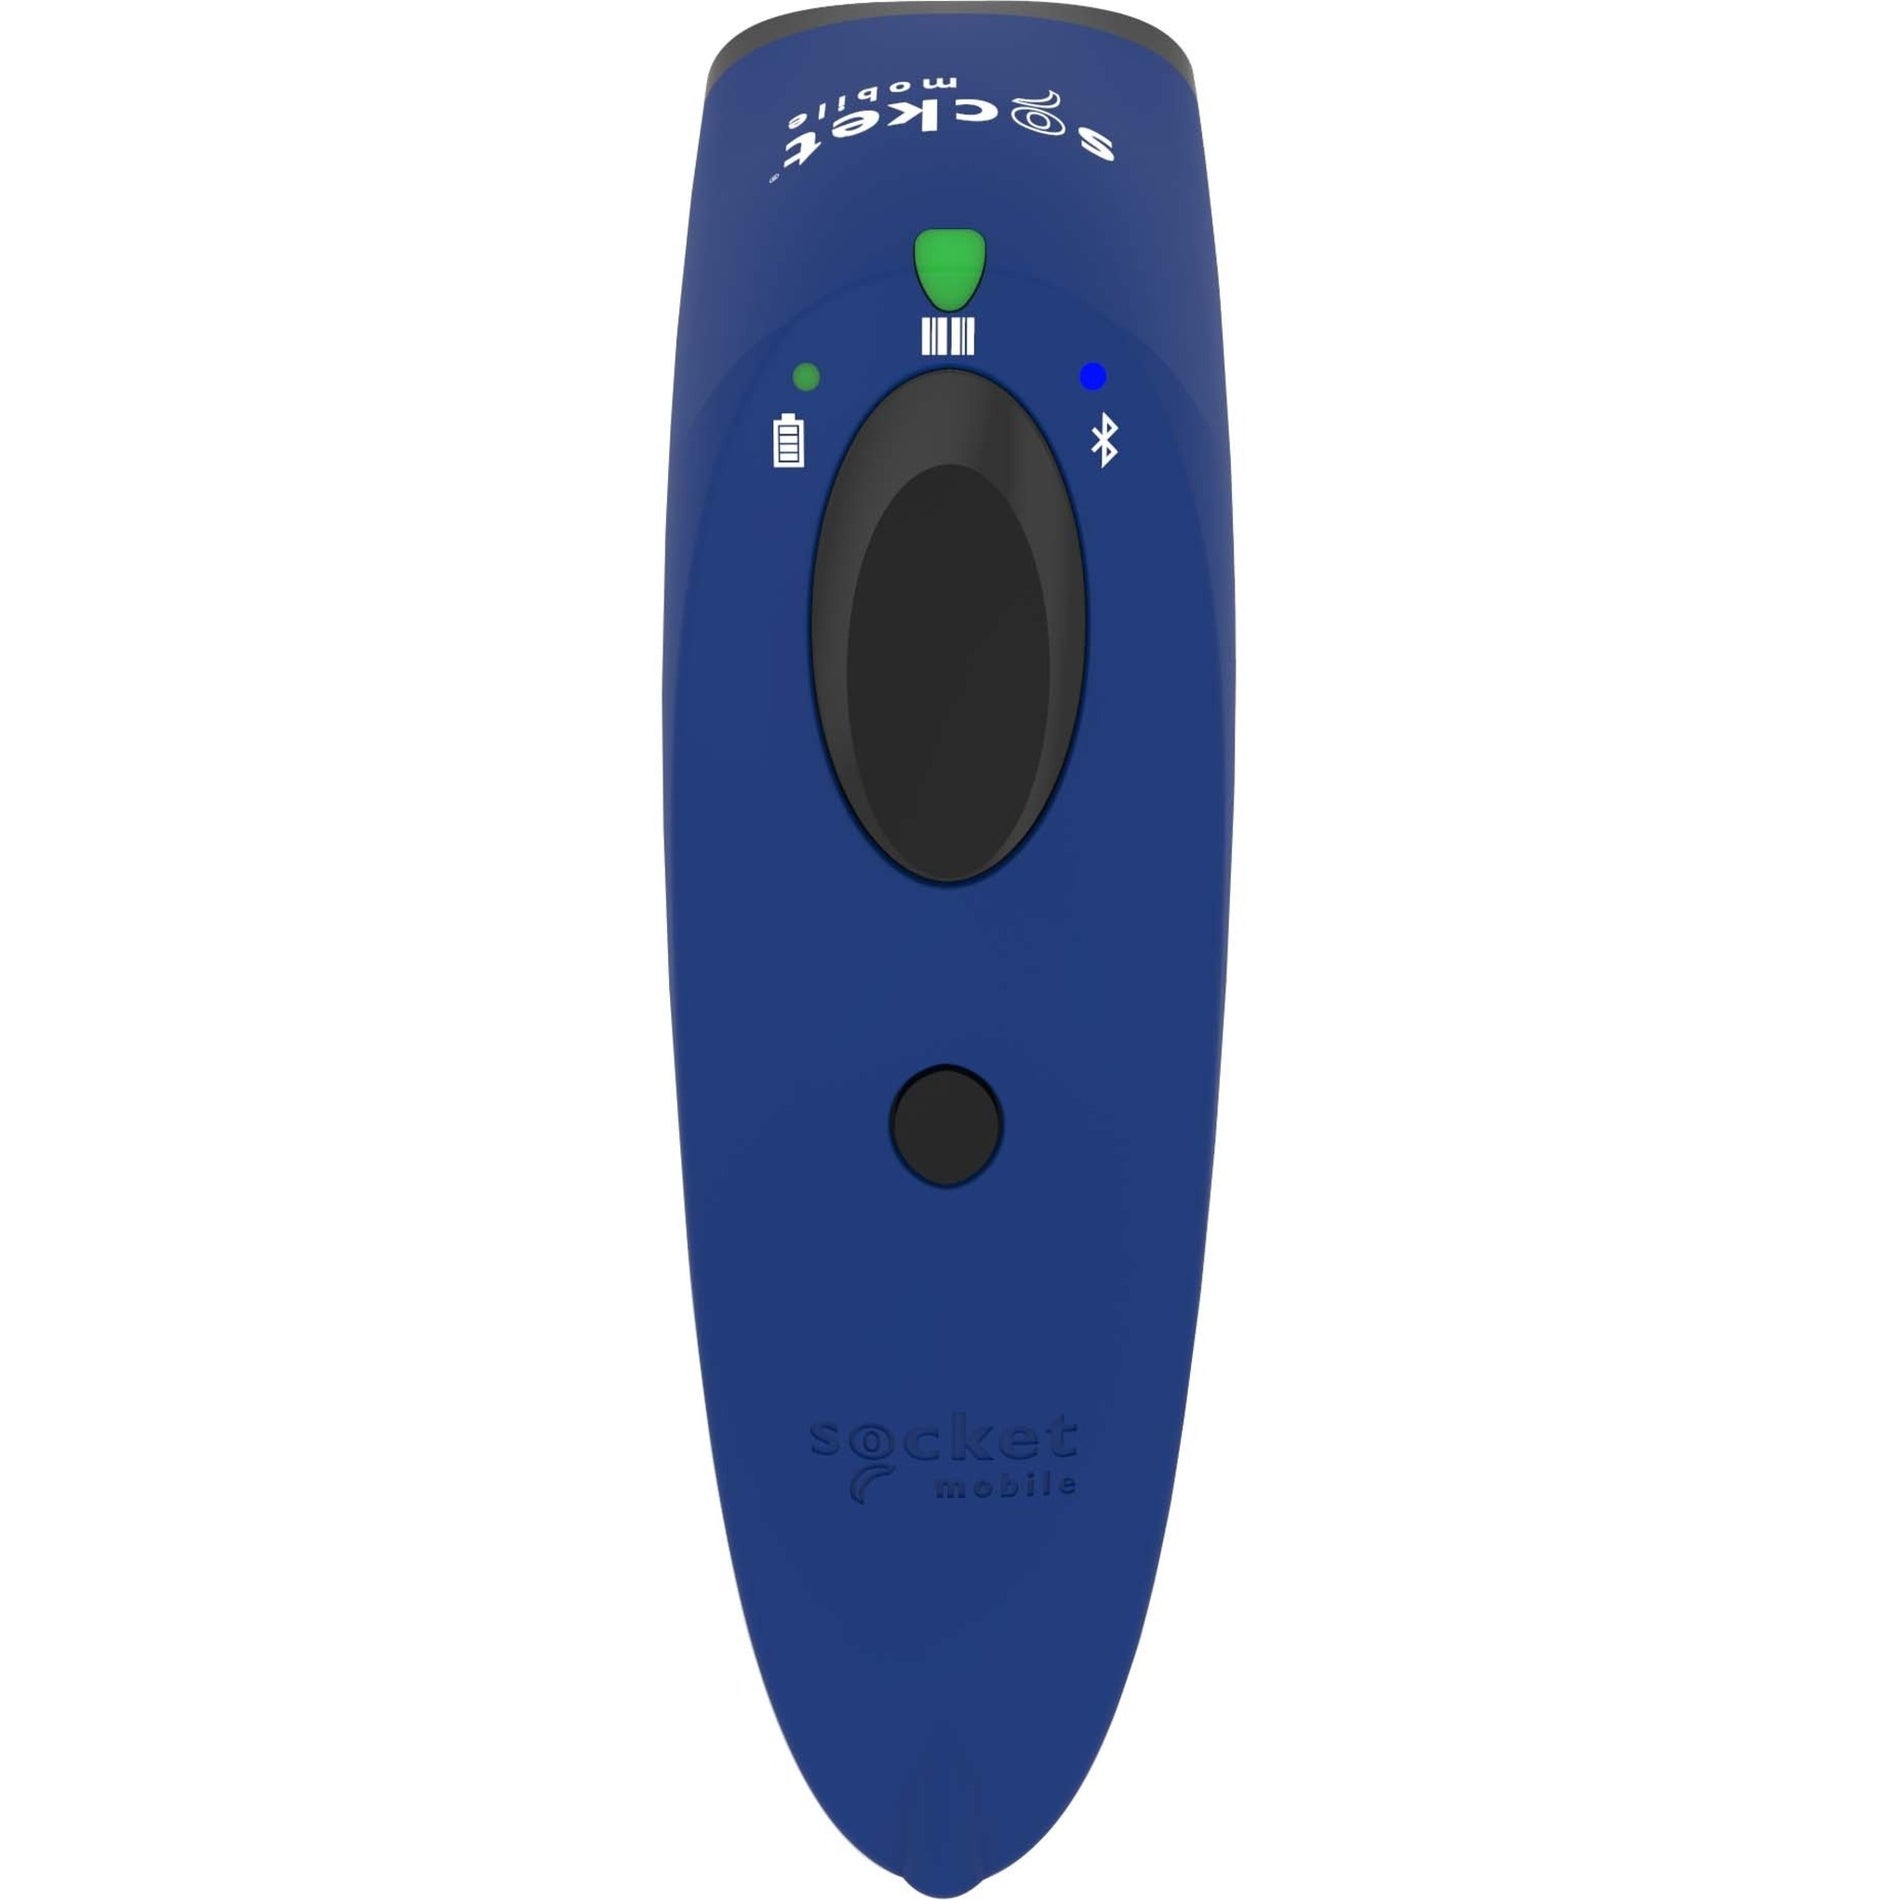 Socket Mobile CX3431-1881 SocketScan S740 Universal Barcode Scanner, Blue